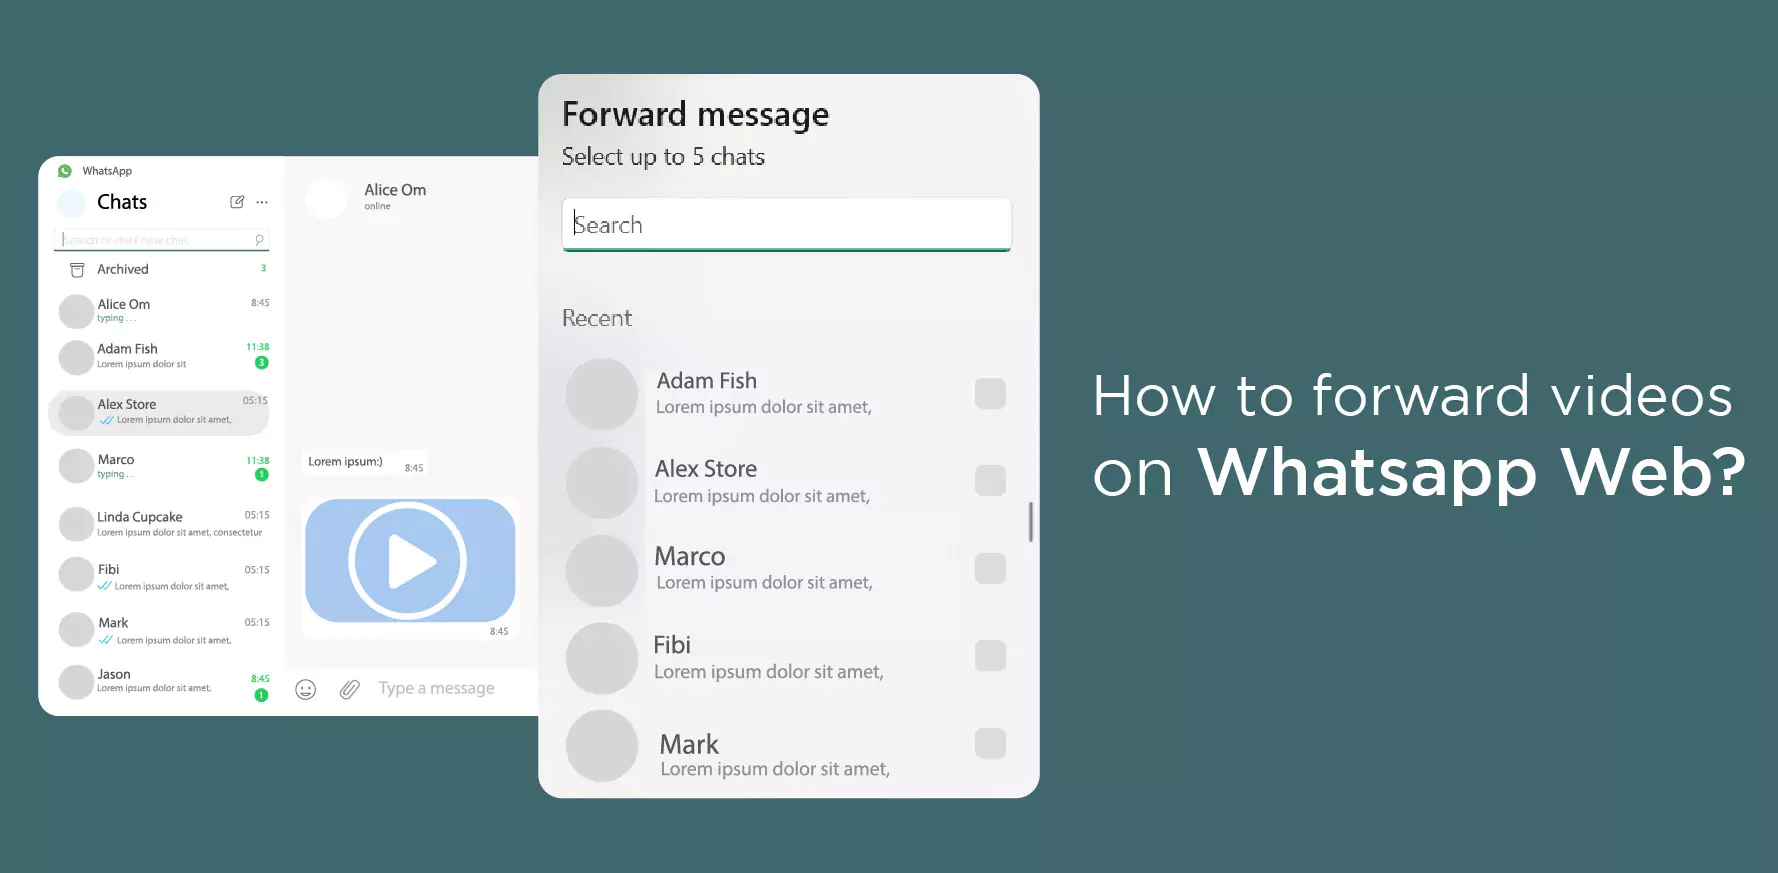 How To Forward Videos On Whatsapp Web? 